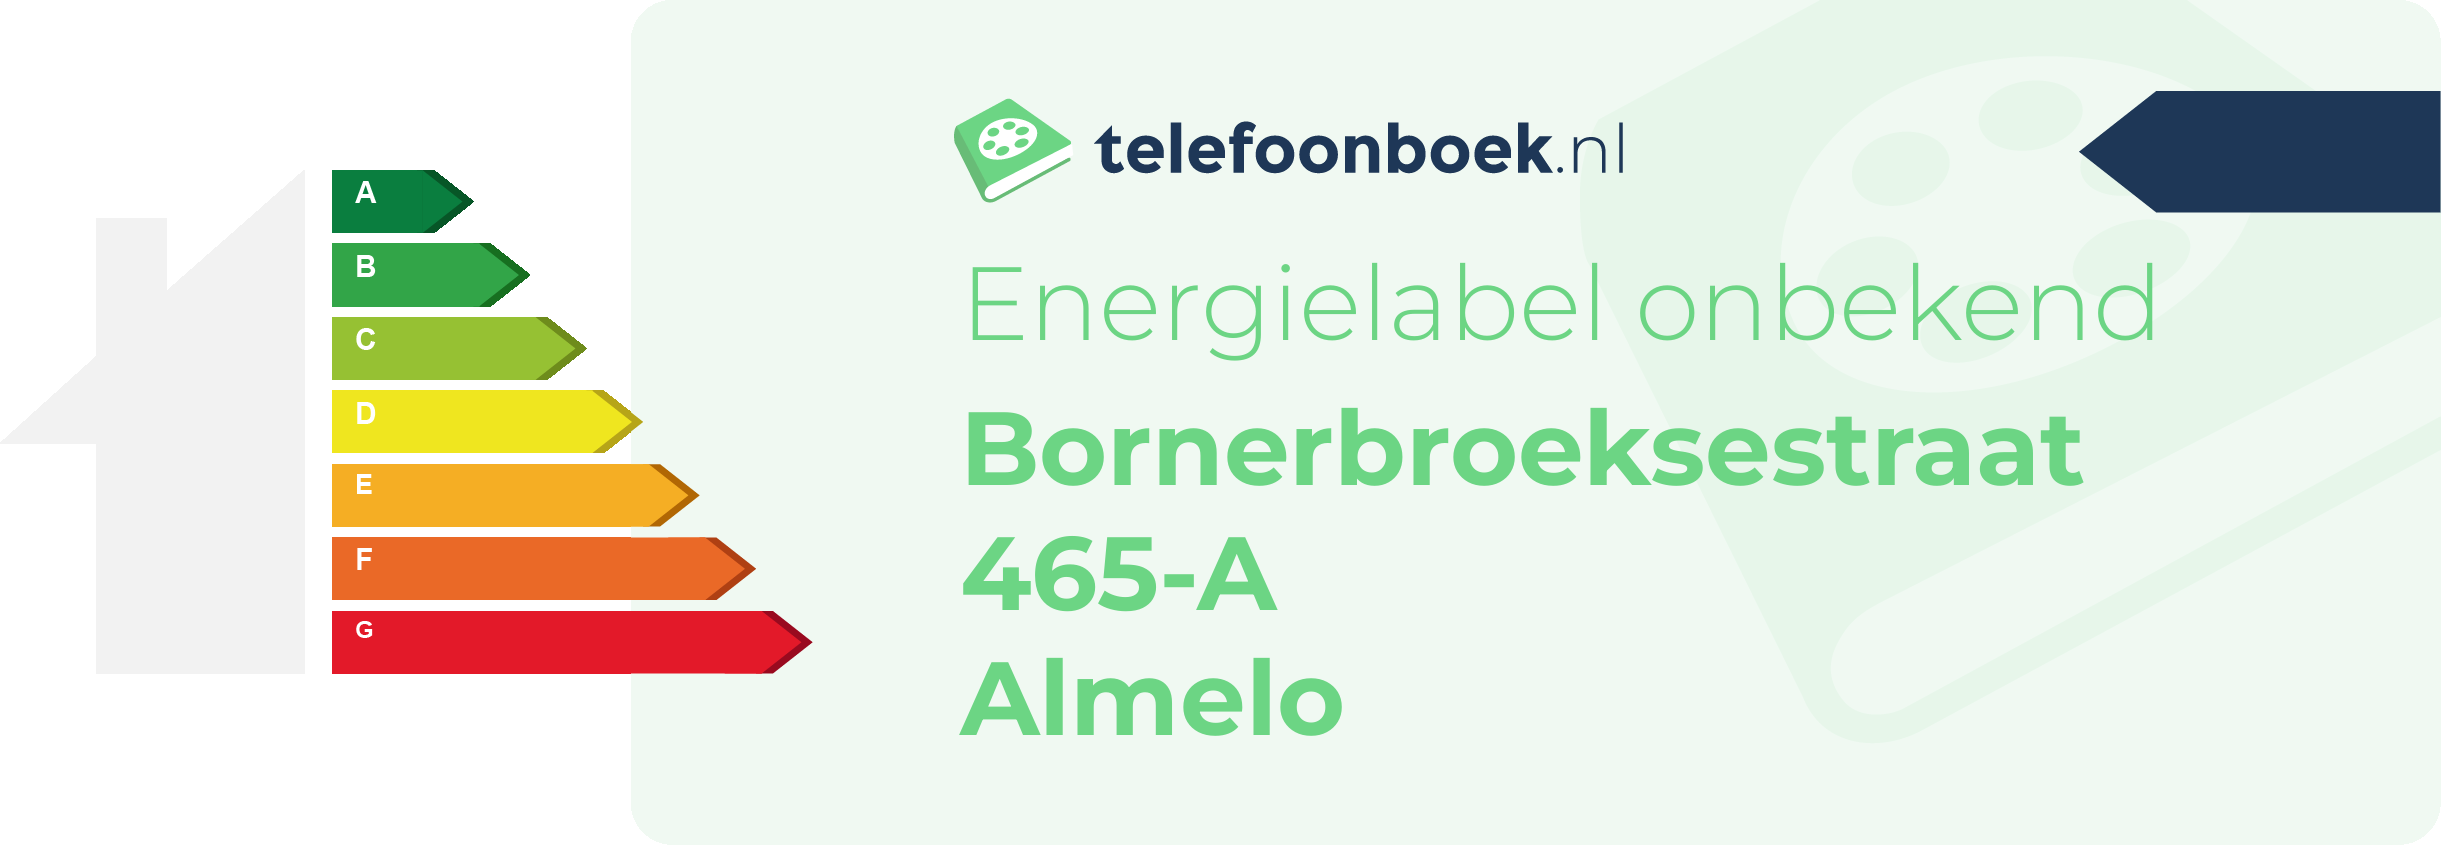 Energielabel Bornerbroeksestraat 465-A Almelo